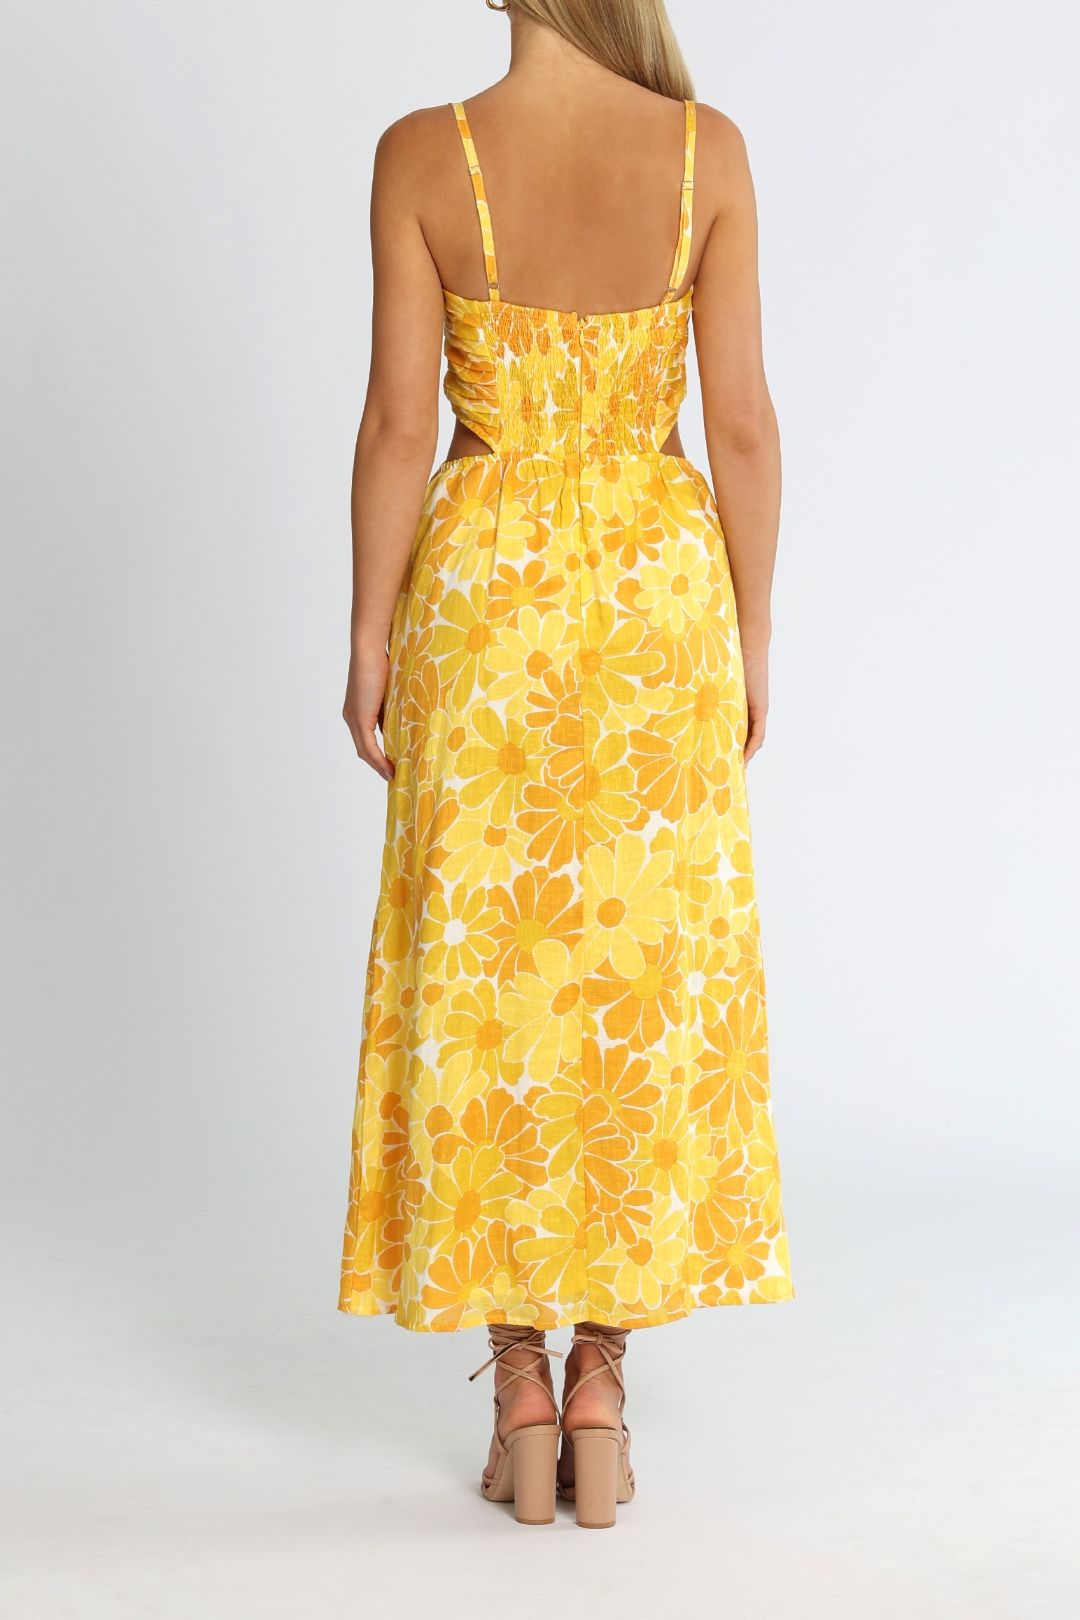 Faithfull Jamaica Midi Dress Yellow Floral Sleeveless